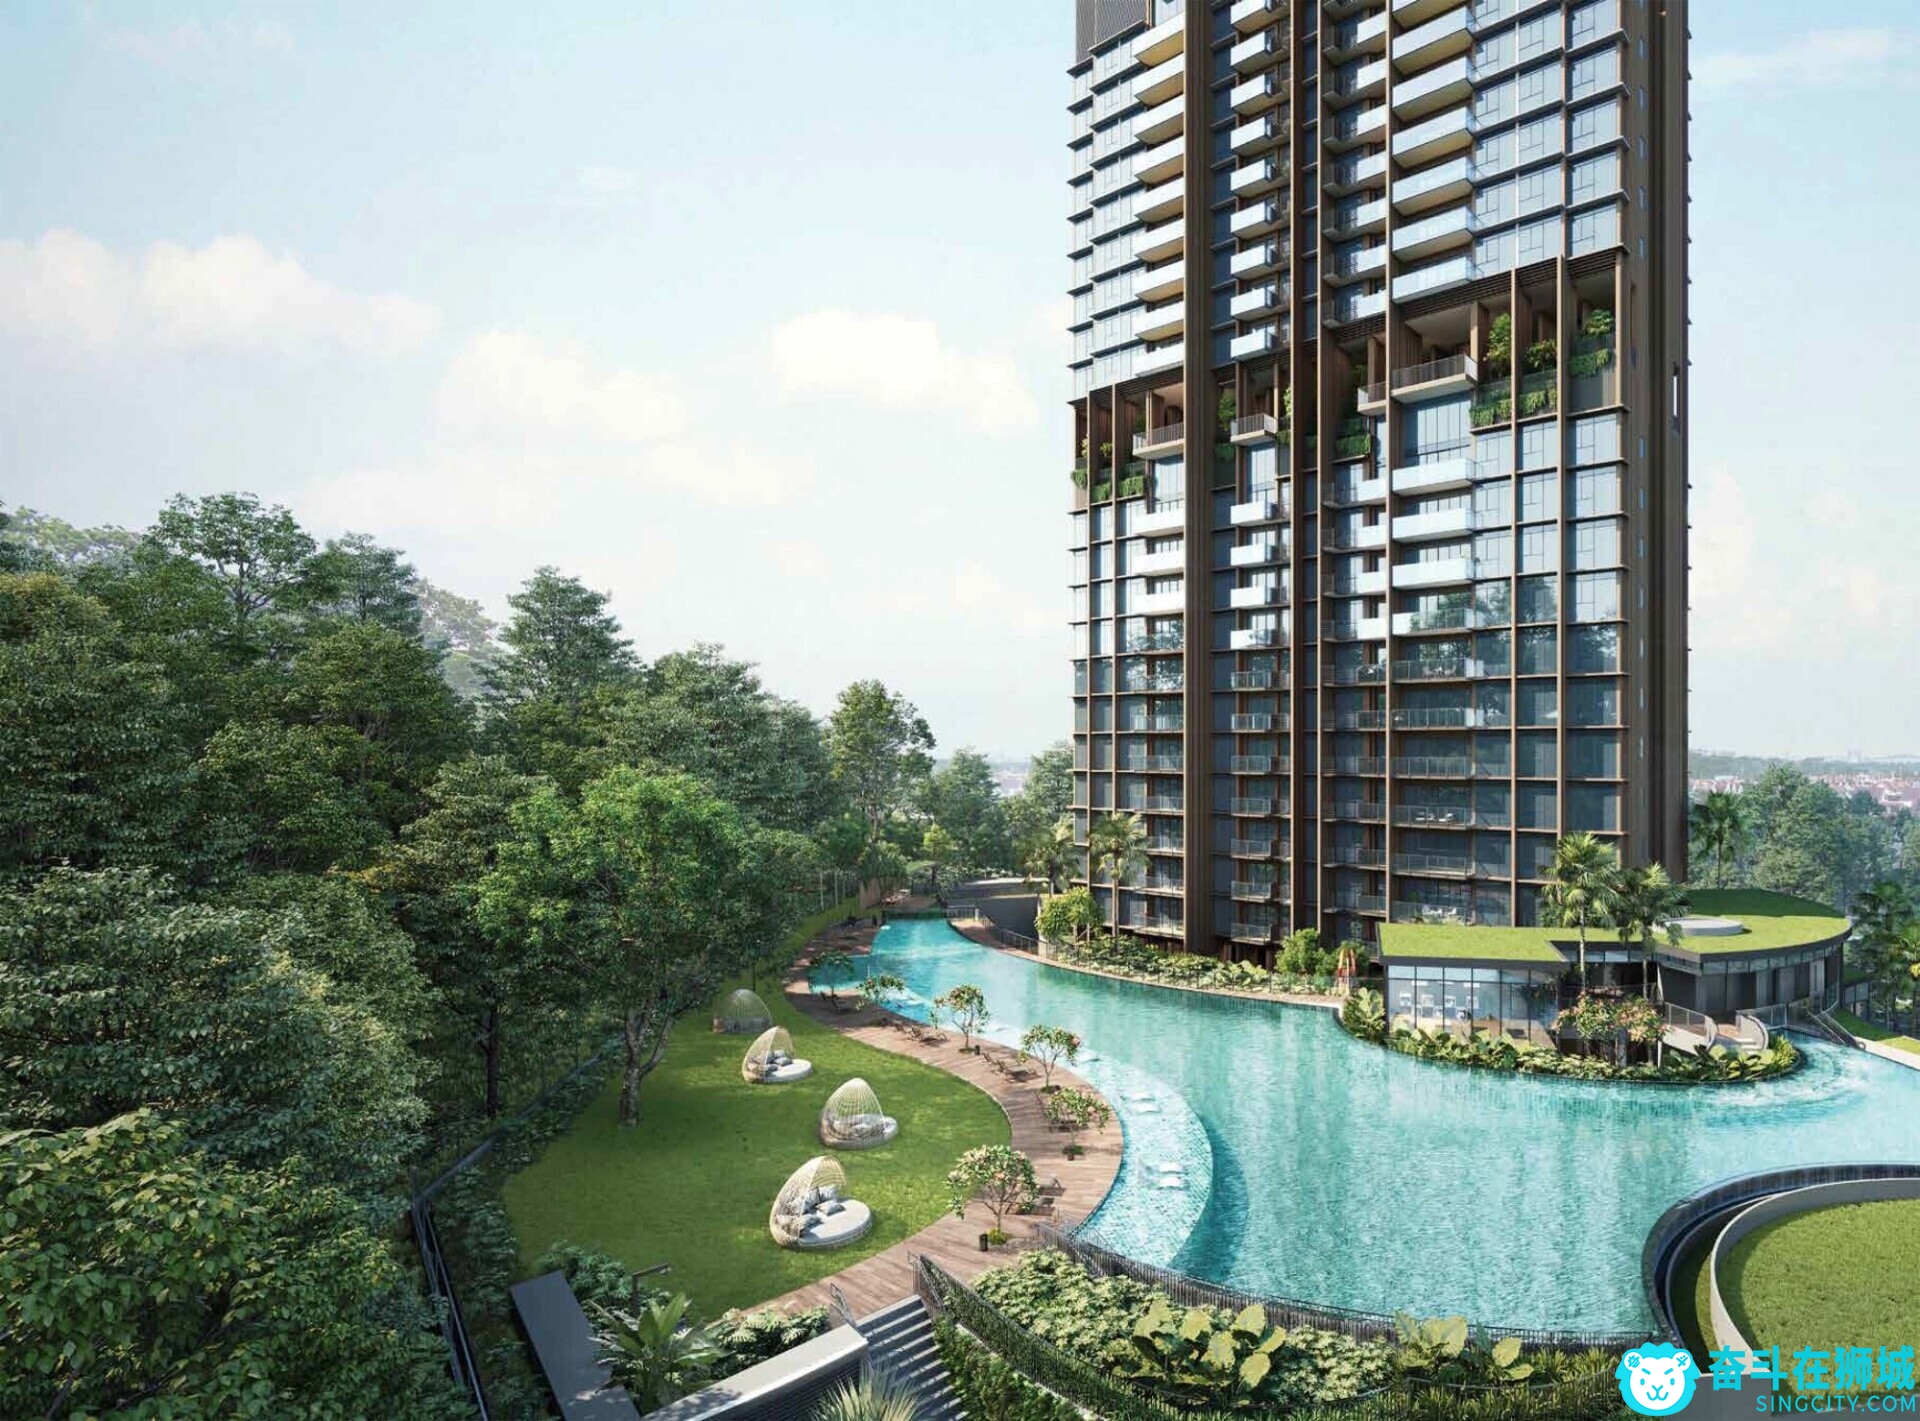 hillock green-photo-singapore-new-launch-condominium-279f6695a8a8178f9475b11c21762164.jpg